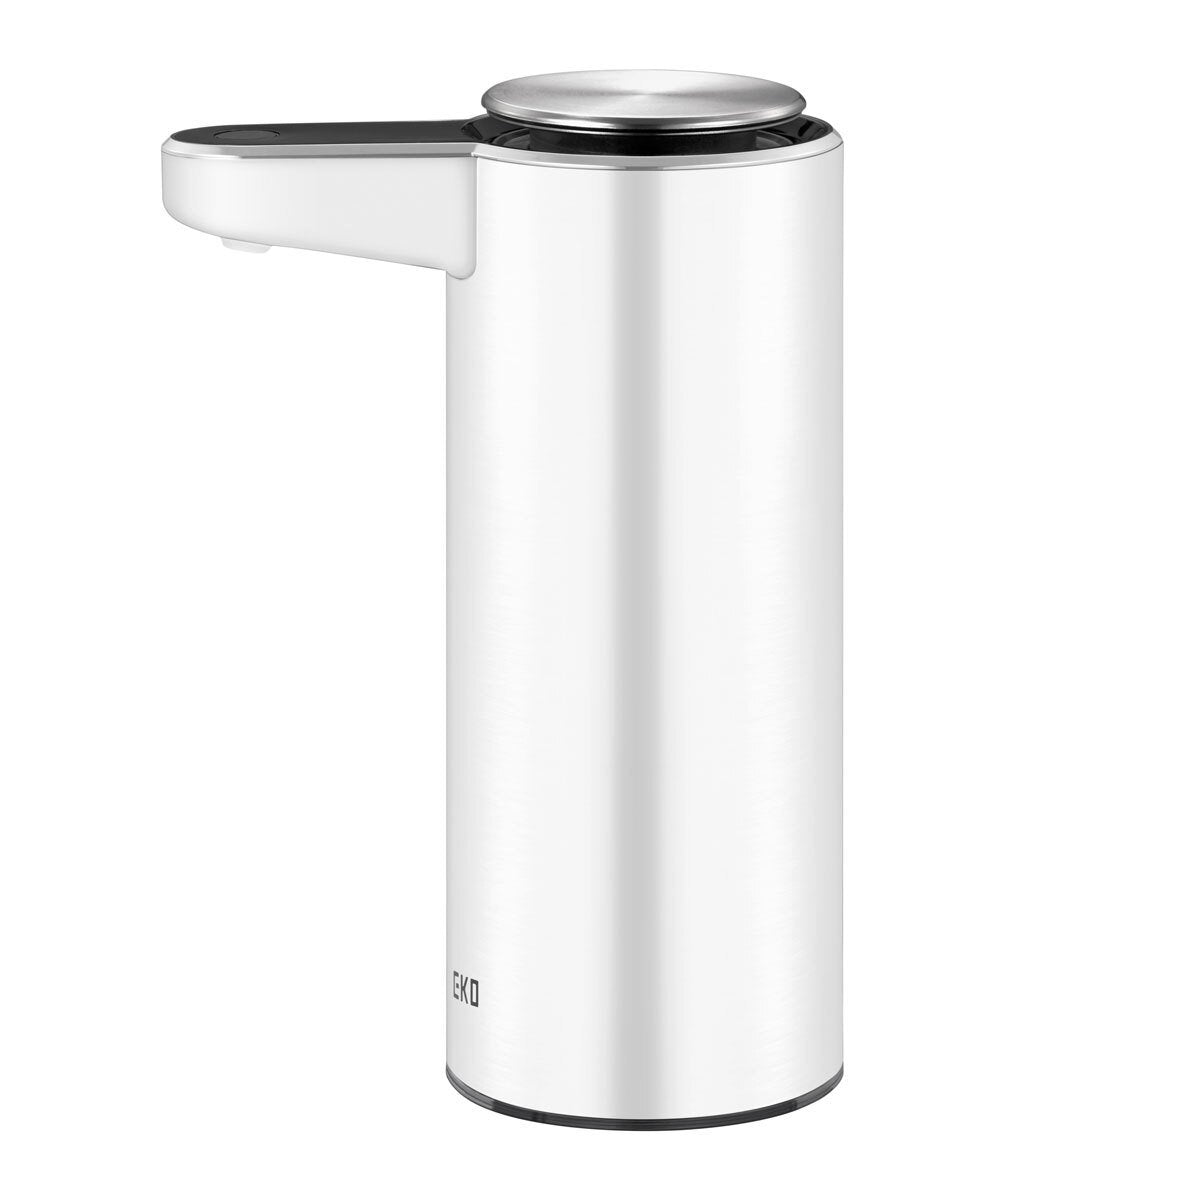 EKO Aroma Motion Sensor Soap Pump in White - Signature Retail Stores